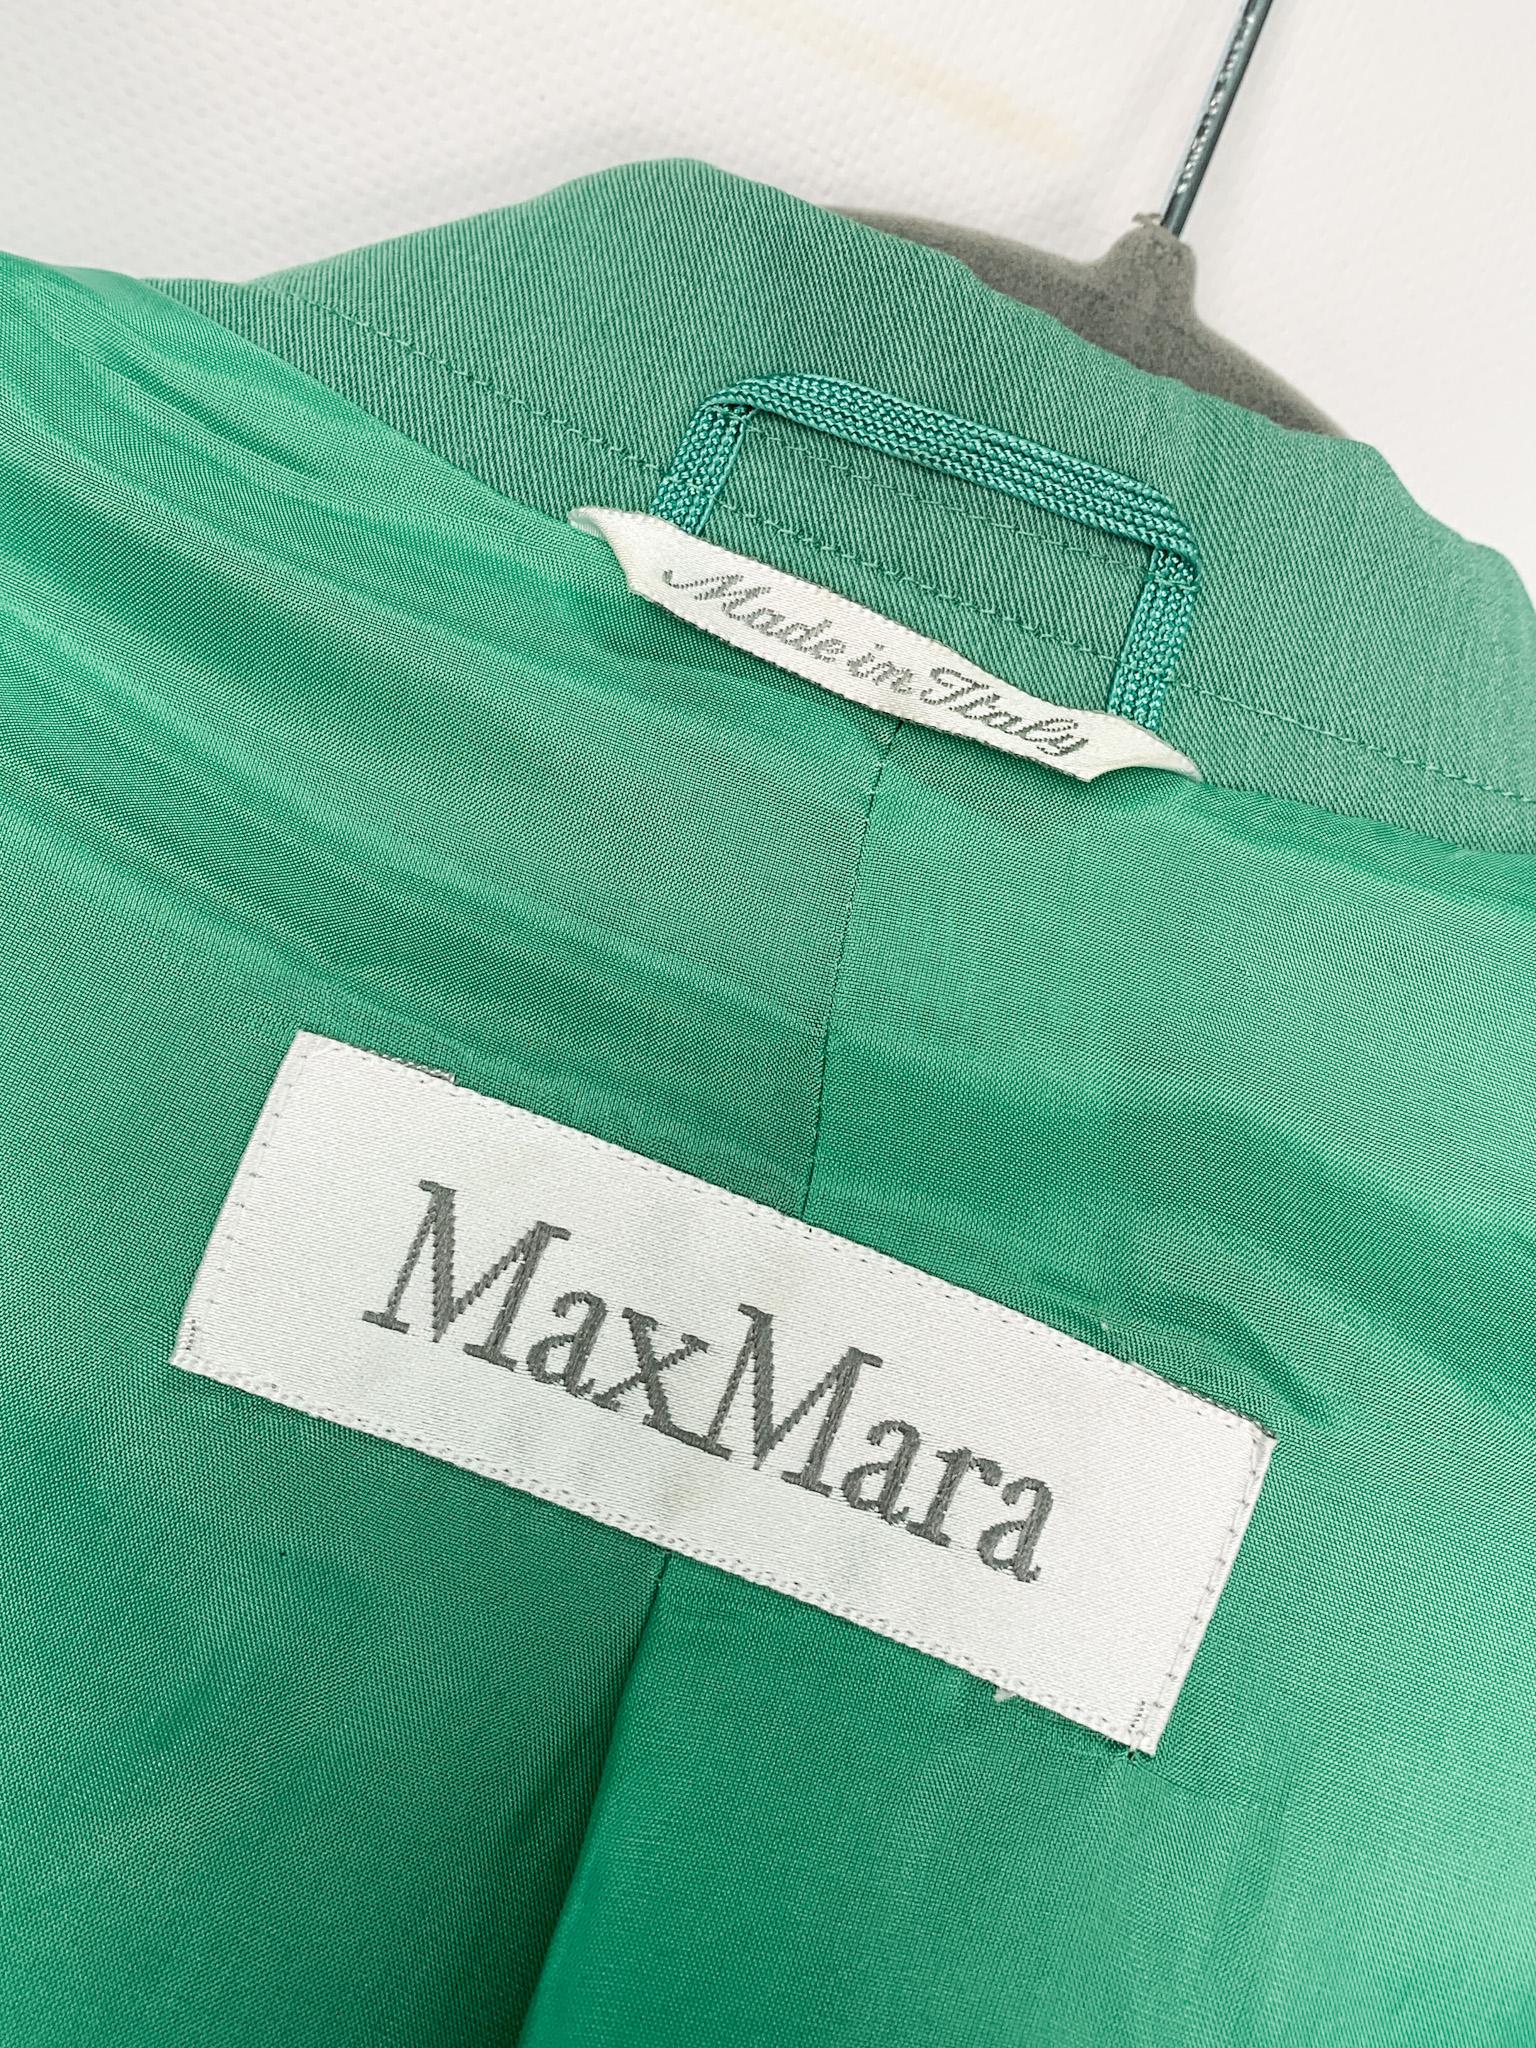 MaxMara solid colour mint green wool & silk trouser suit, trousers, blazer 11